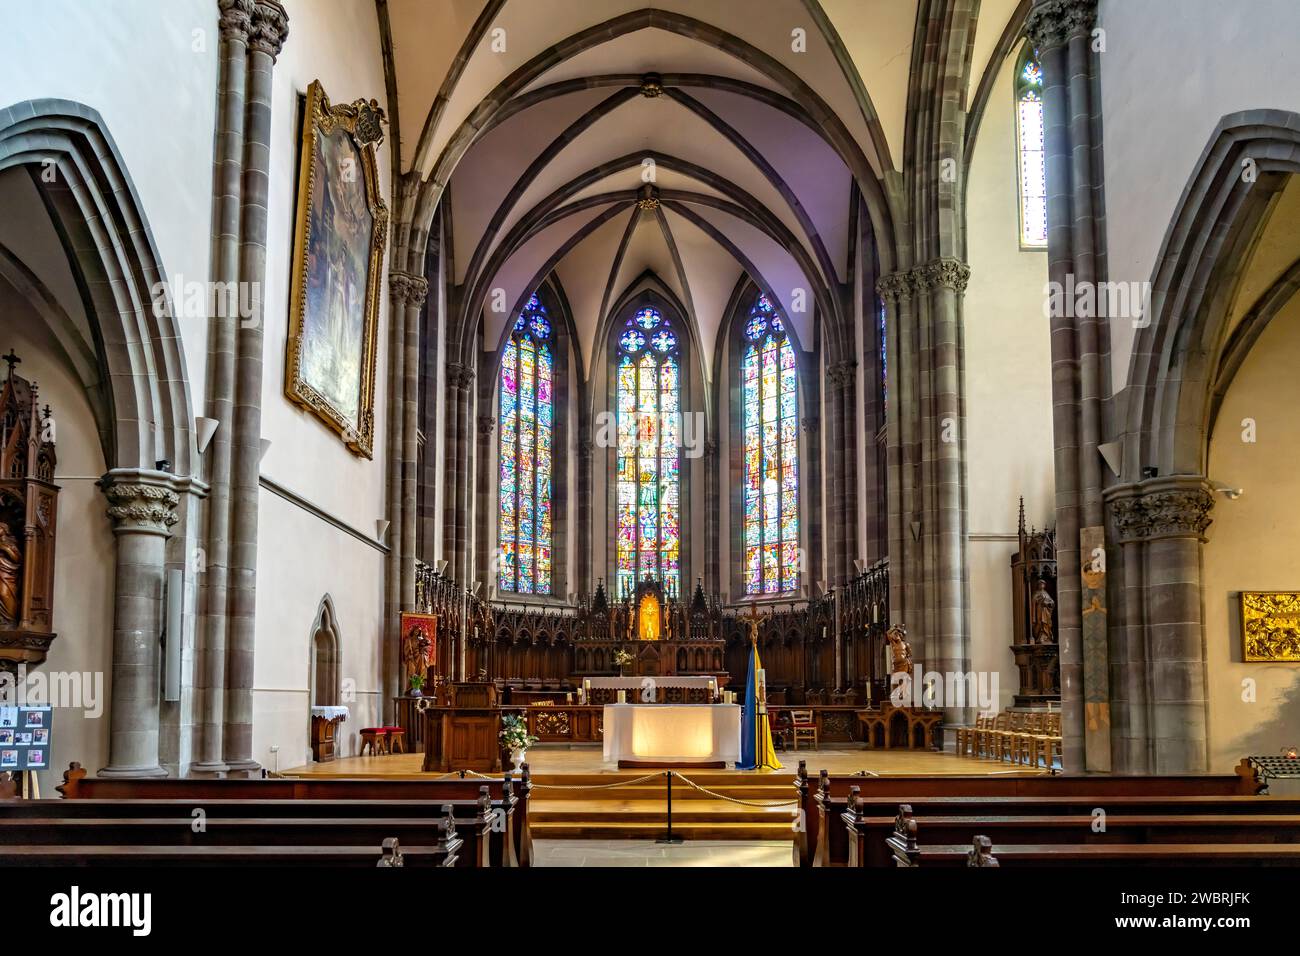 Innenraum der Römisch-katholischen Kirche St-Grégoire oder St. Gregor in Ribeauville, Elsass, Frankreich | Église catholique romaine St Gregory interi Banque D'Images